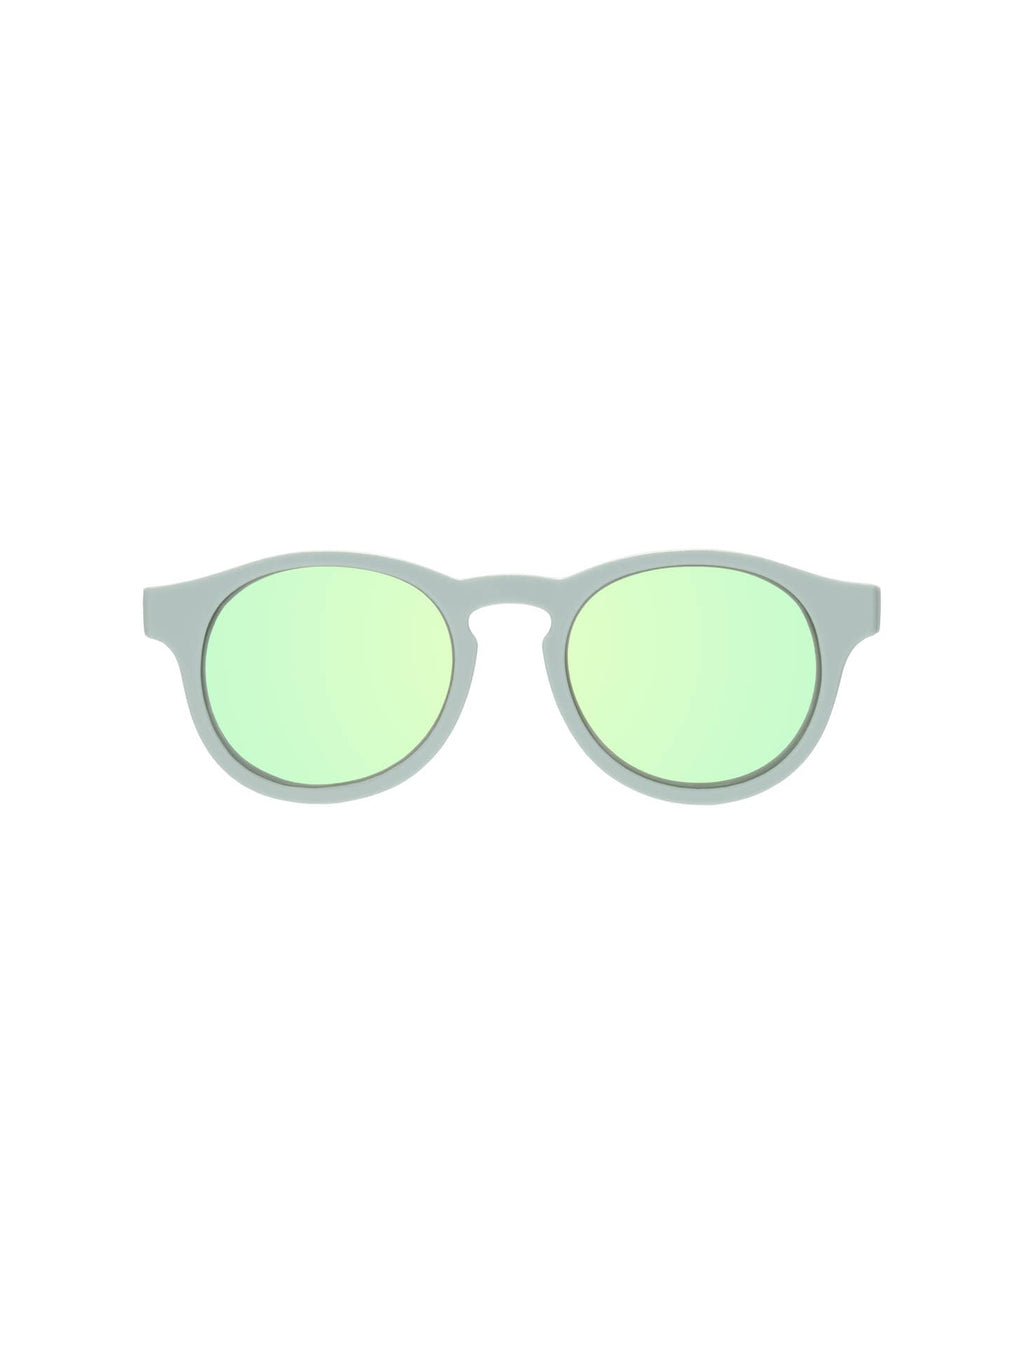 Babiators Polarized Keyhole Sunglasses - Multiple Colors!